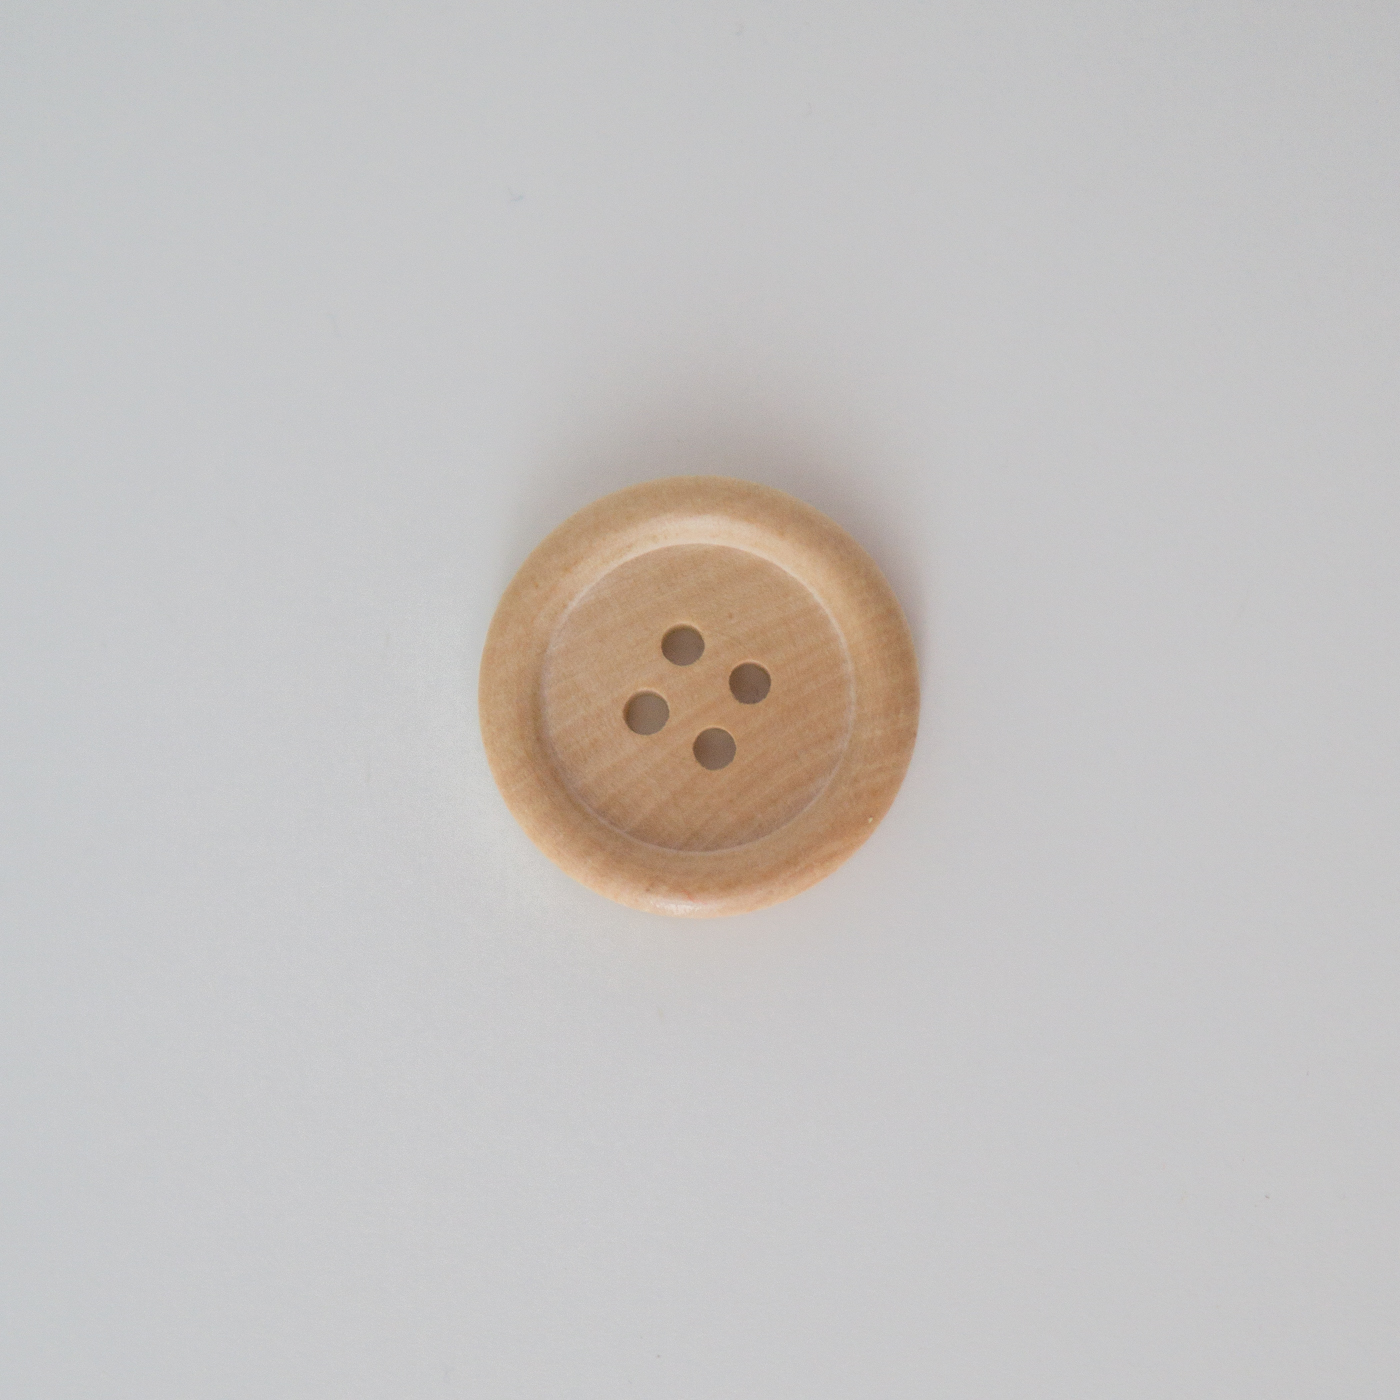 treknapp 4 hull - Wooden button | Natural light wood button knitting - by HipKnitShop - 16/10/2018